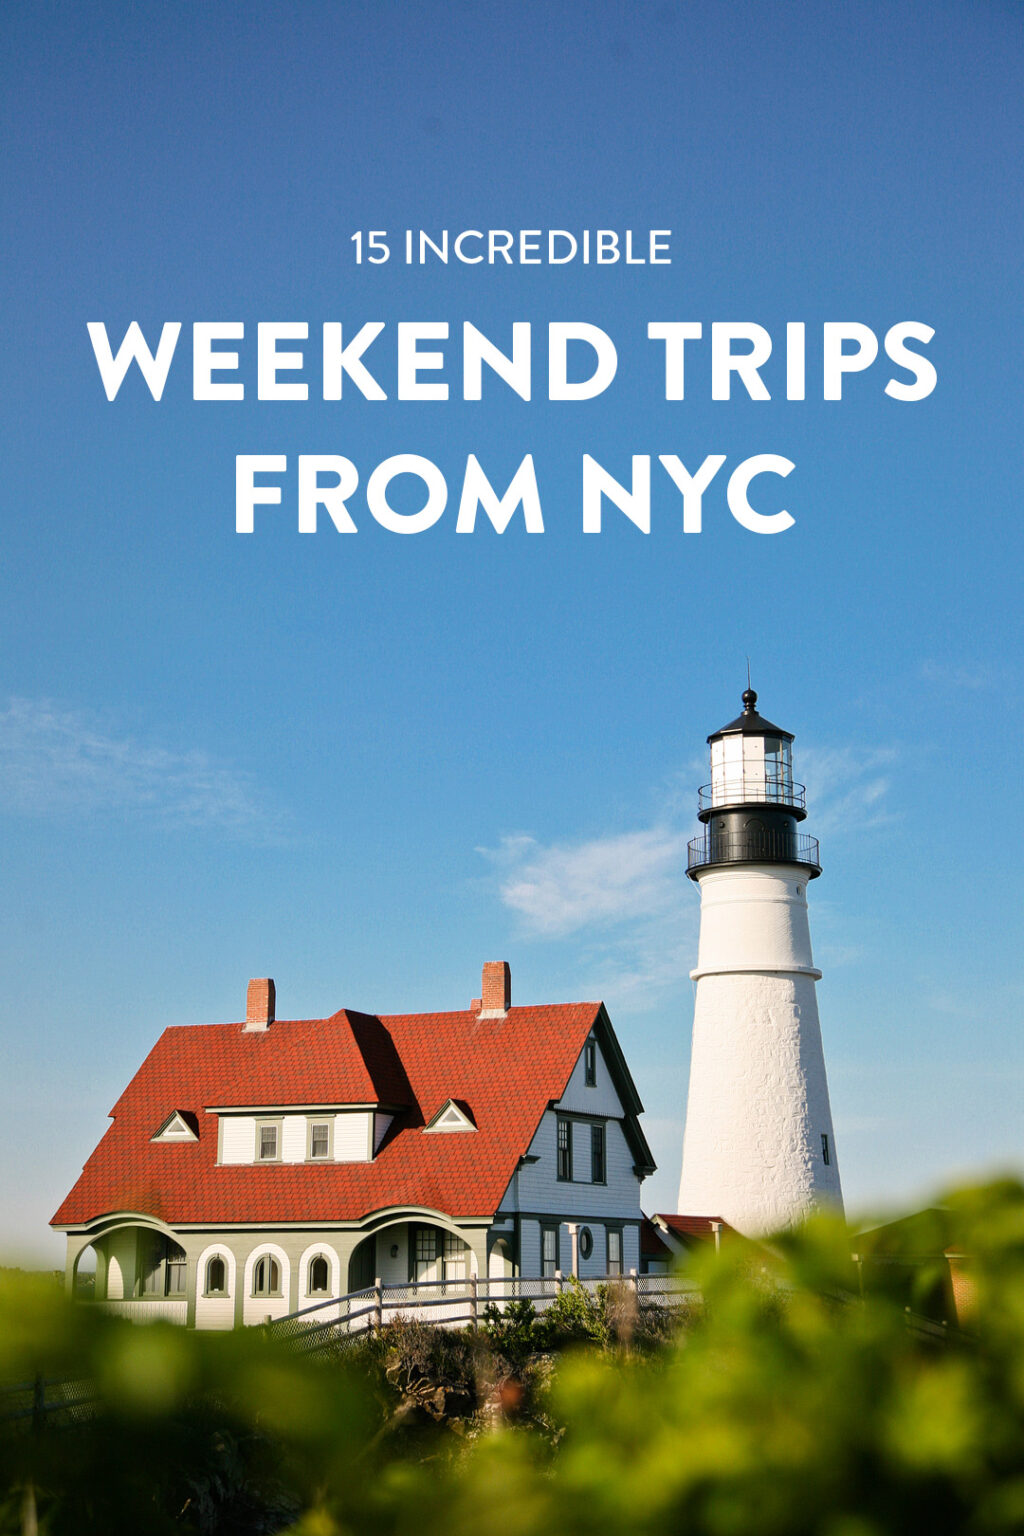 weekend trips from nyc reddit